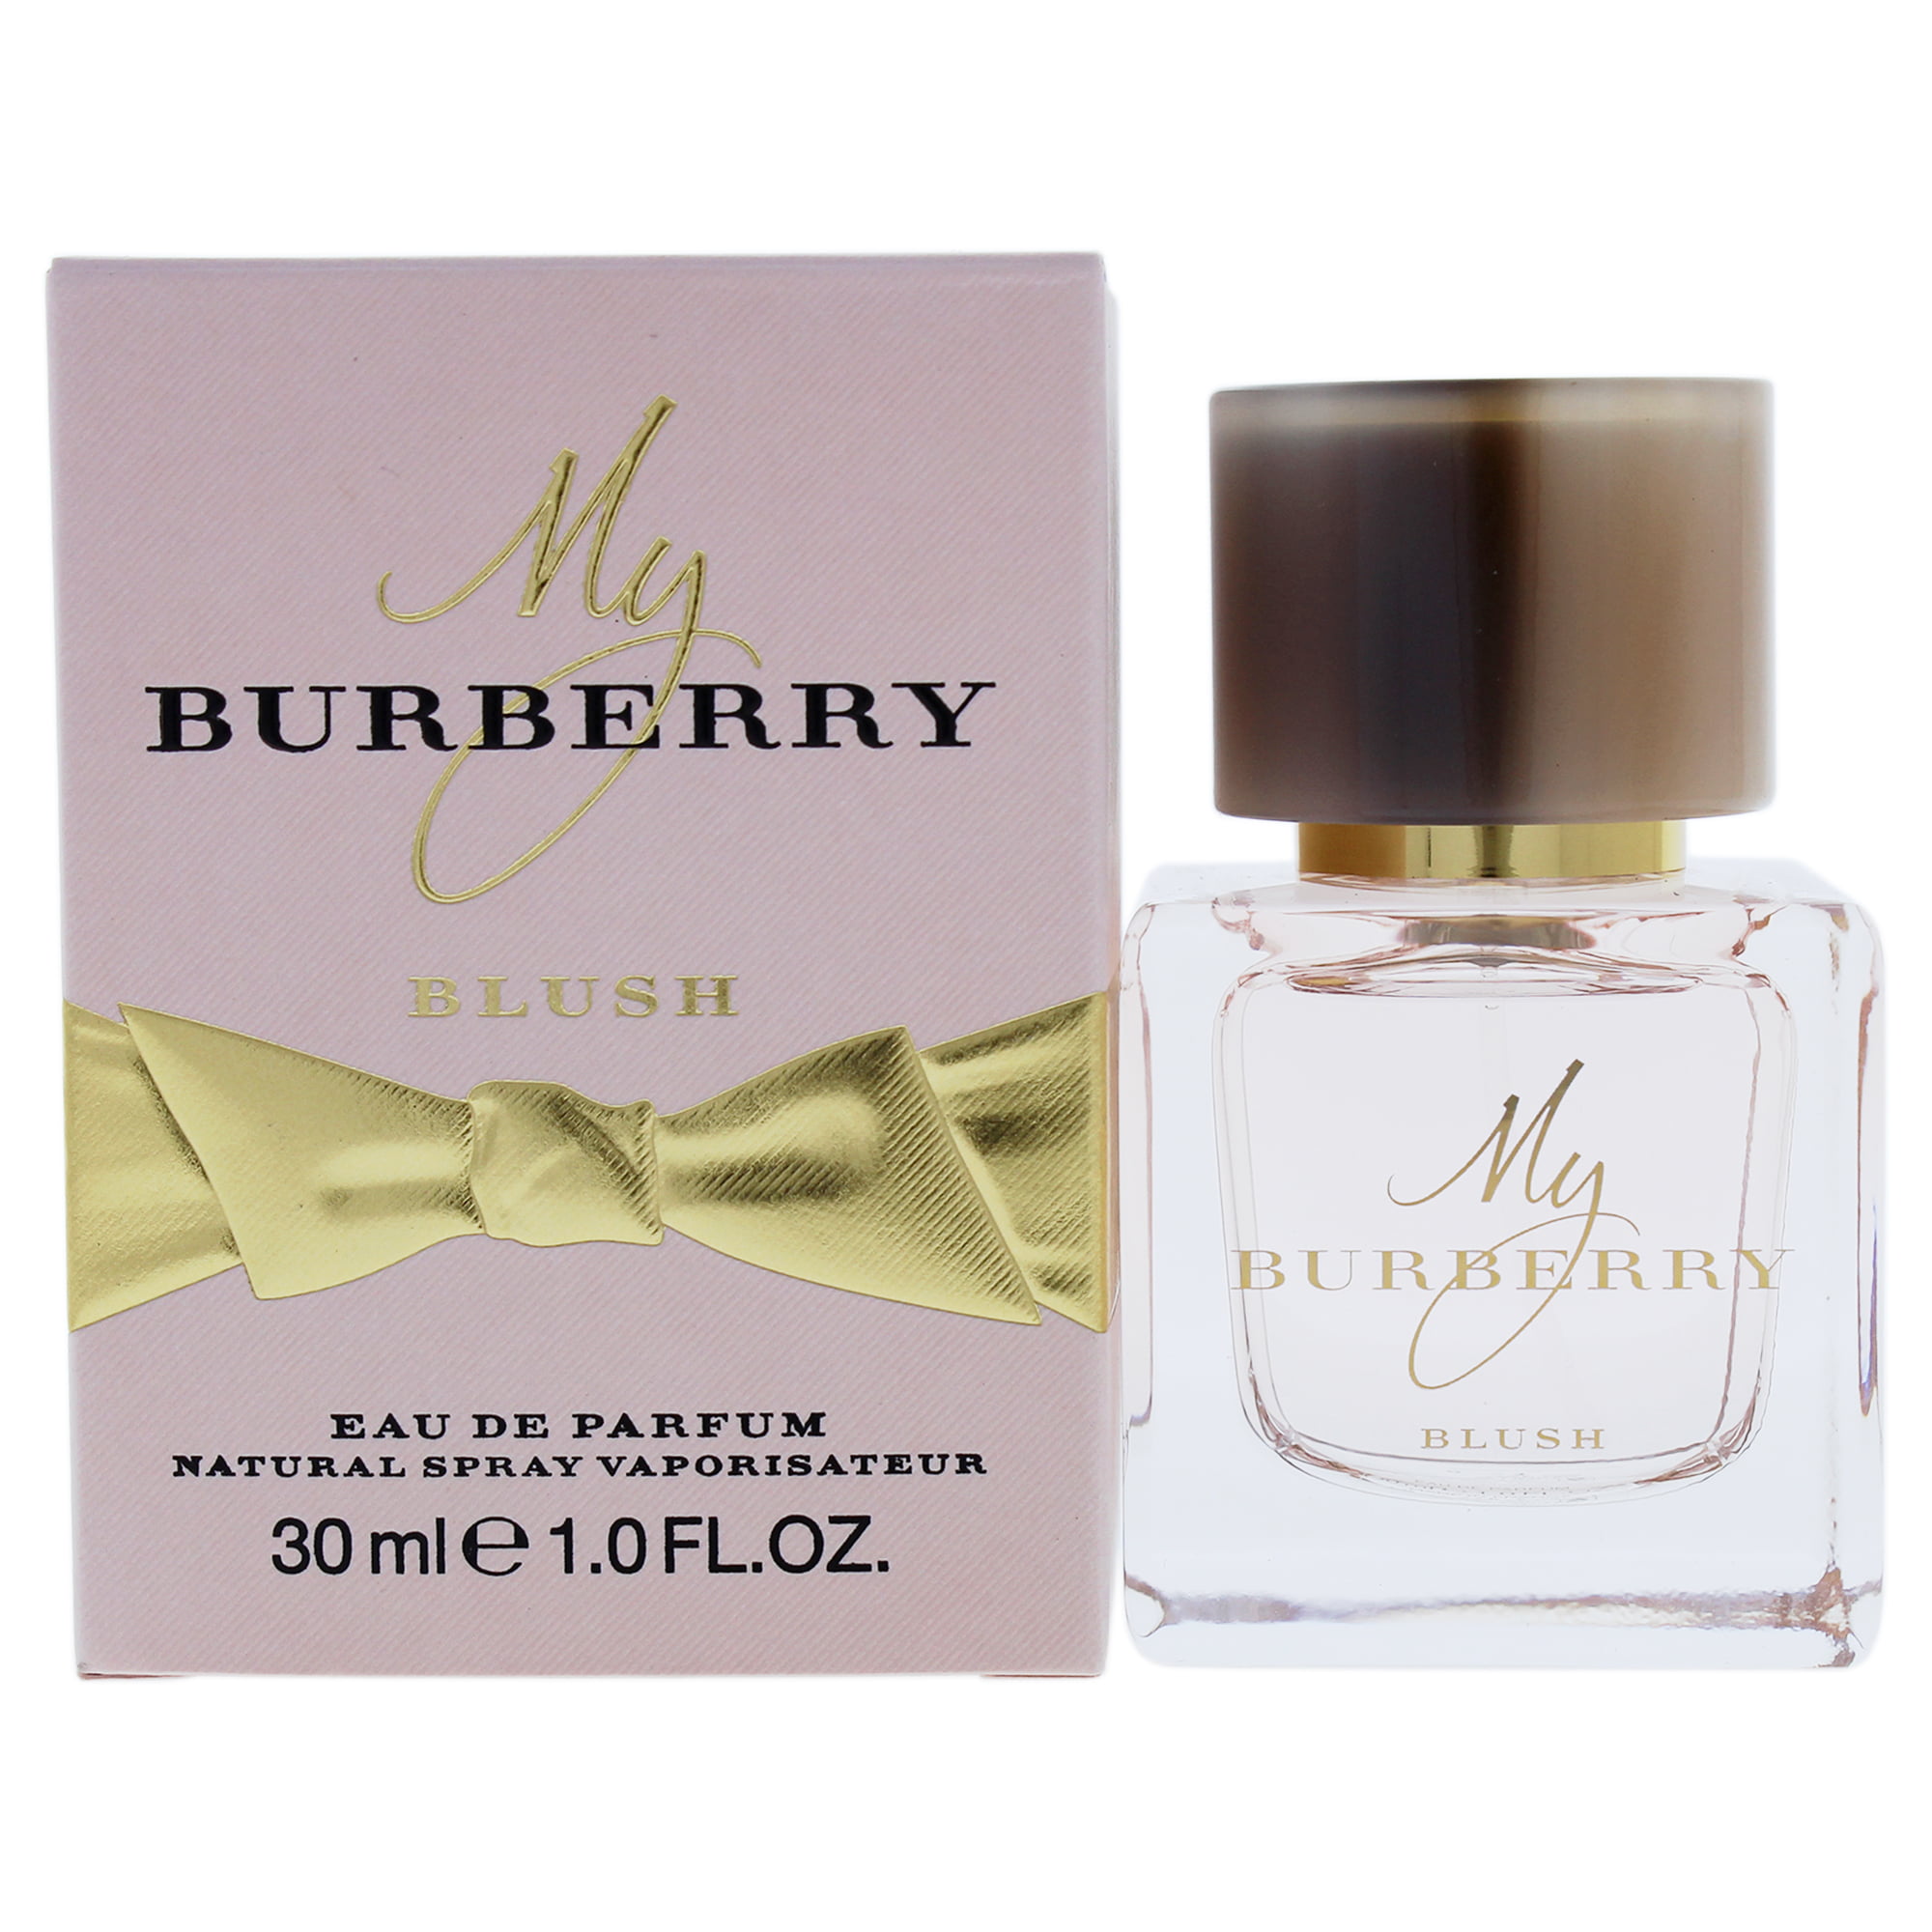 Burberry - My Burberry Blush by Burberry for Women - 1 oz EDP Spray